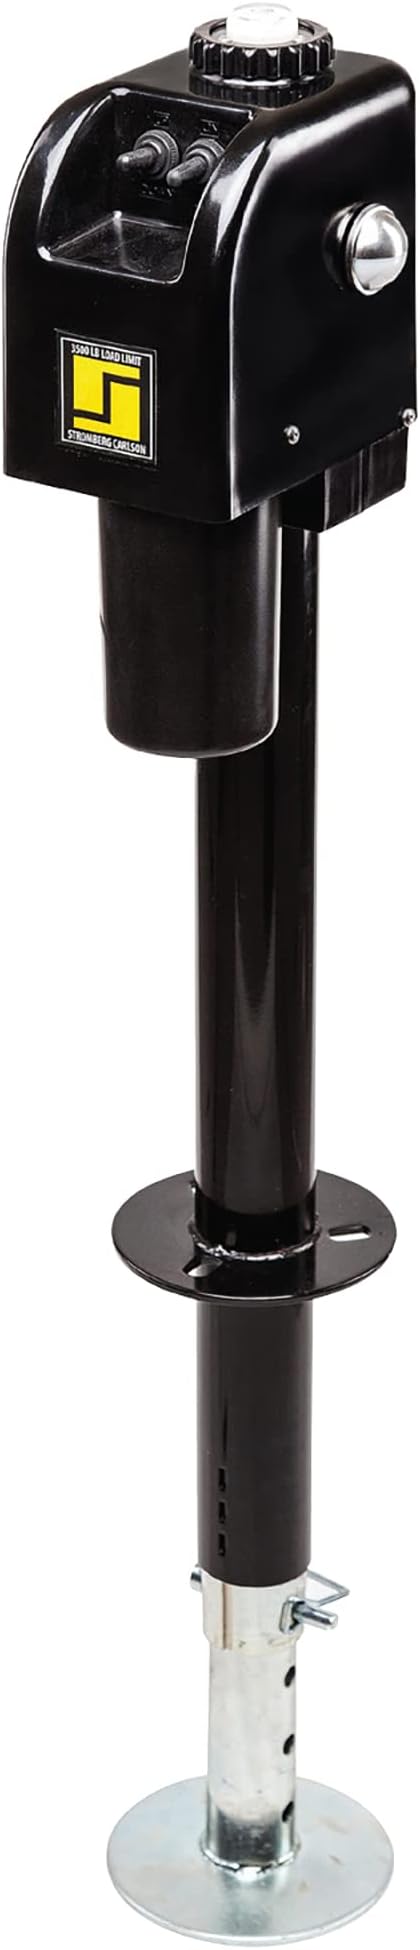 Stromberg Carlson JET-3755 Black 3500 lb. Electric Tongue Jack with Light